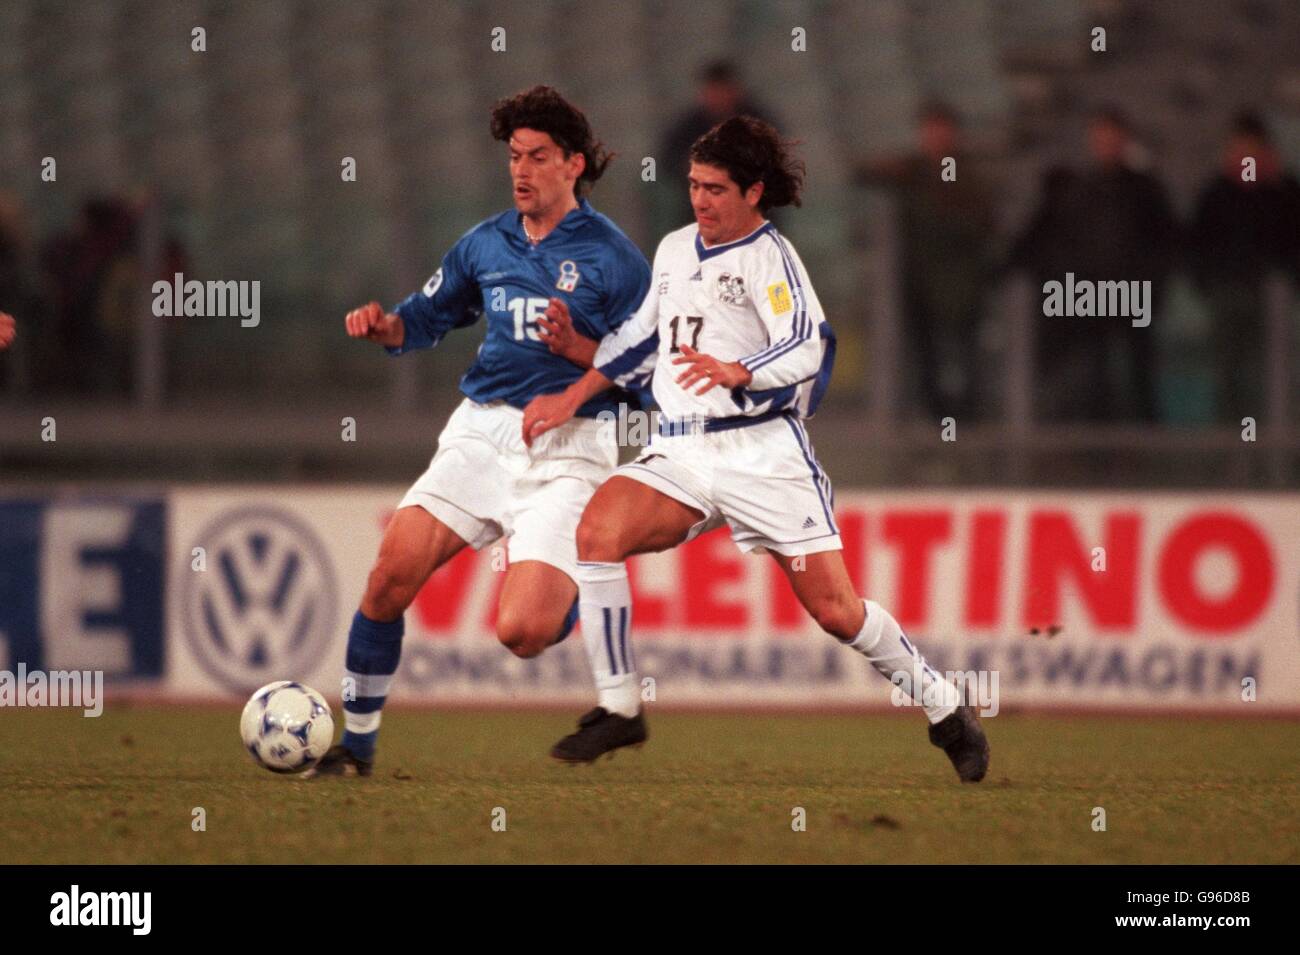 Soccer - Italian Federation Centenary Match - Italy v FIFA World Stars. Italy's Moreno Torrichelli (left) and Marcelo Salas of the FIFA World Stars (right) in a race for the ball Stock Photo